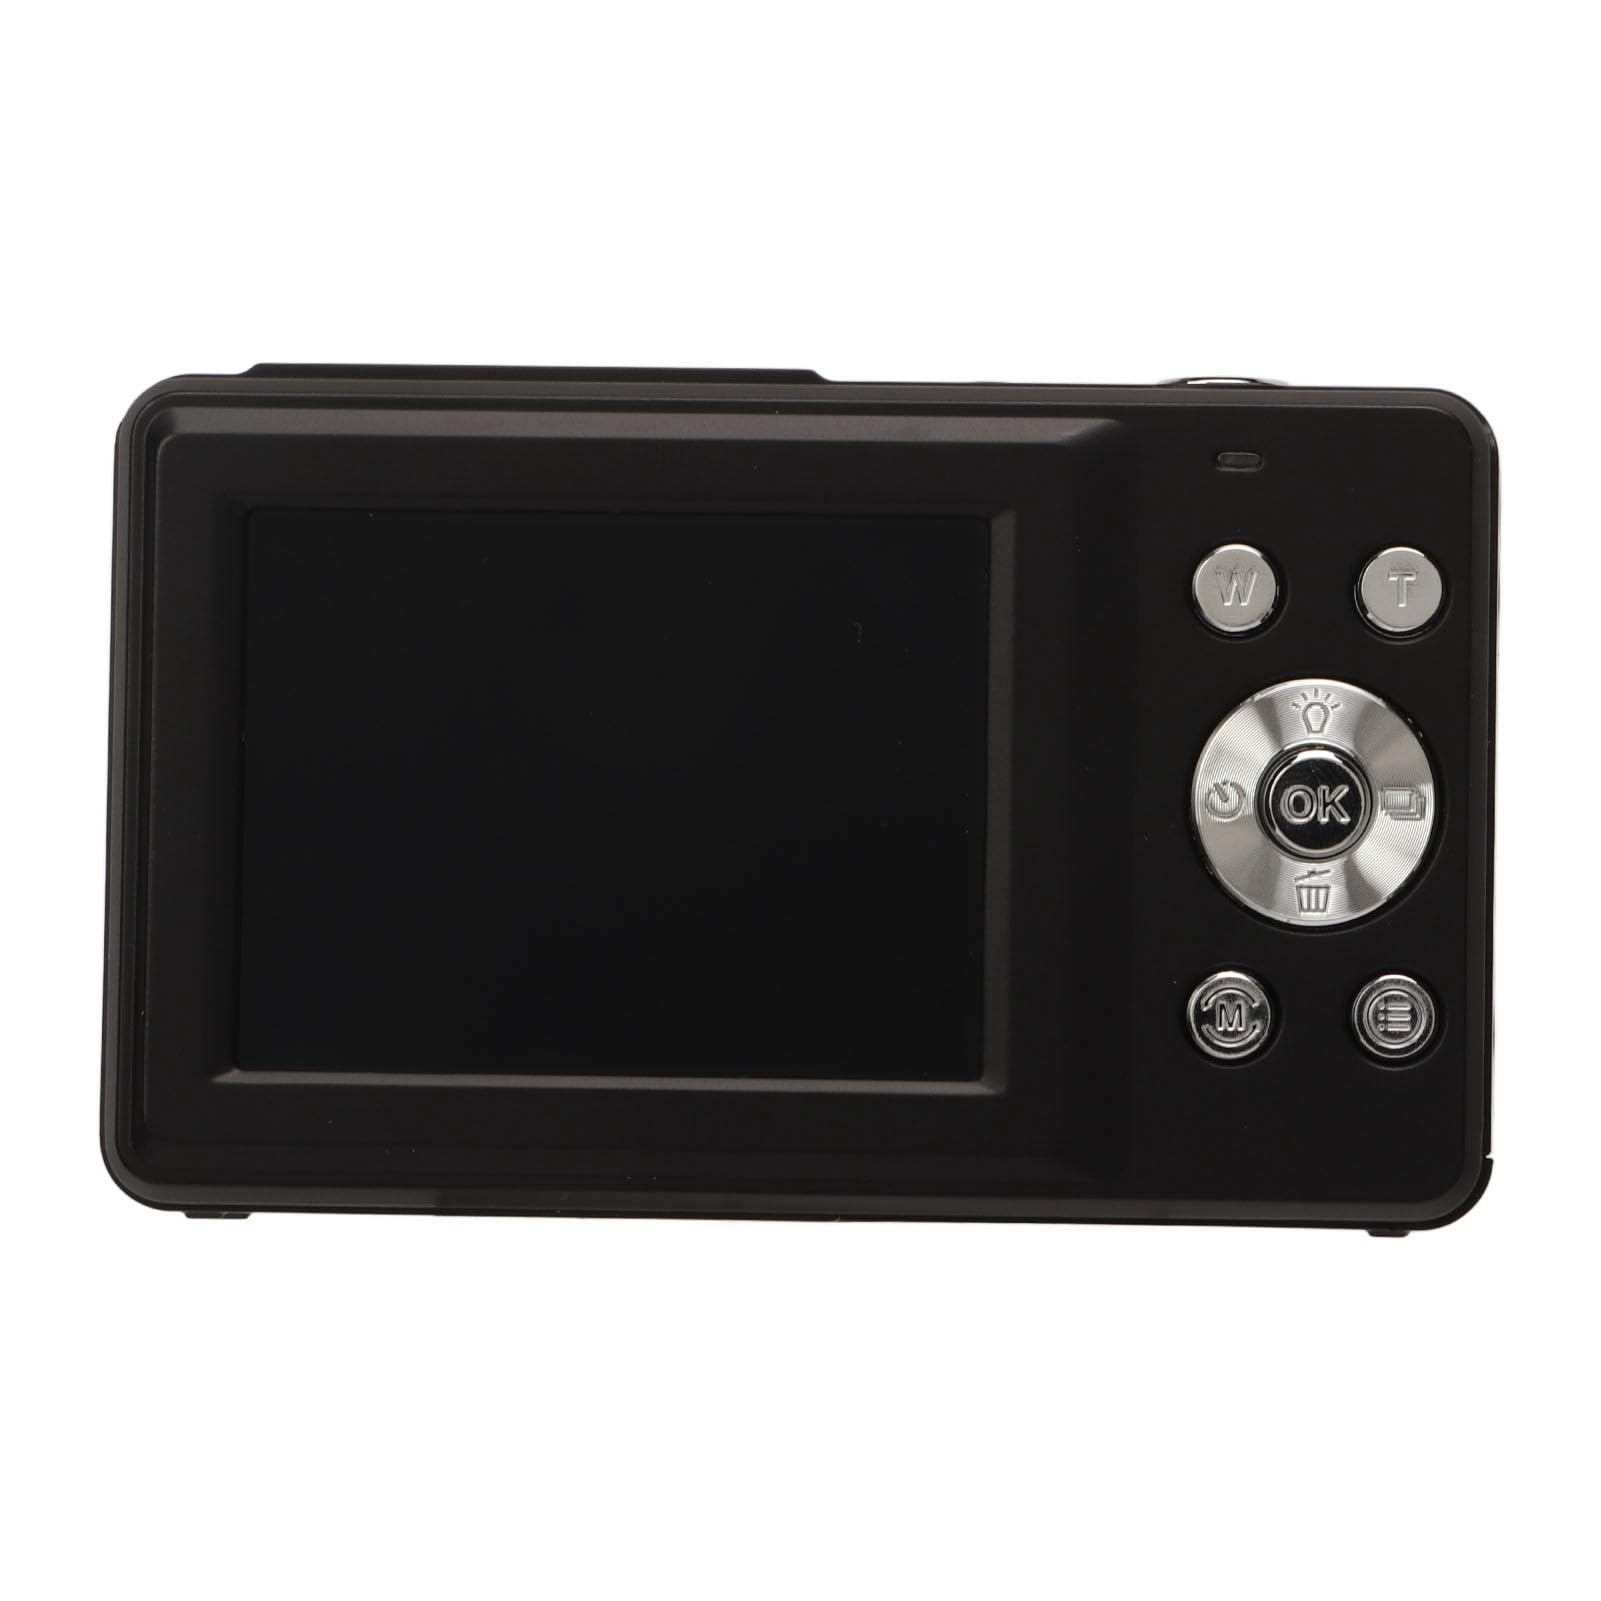 Digital Camera,HD 1080P Autofocus Digital Camera, 16X Zoom, Portable Pocket Size, 2.4 Inch IPS Screen, US Plug(Black)